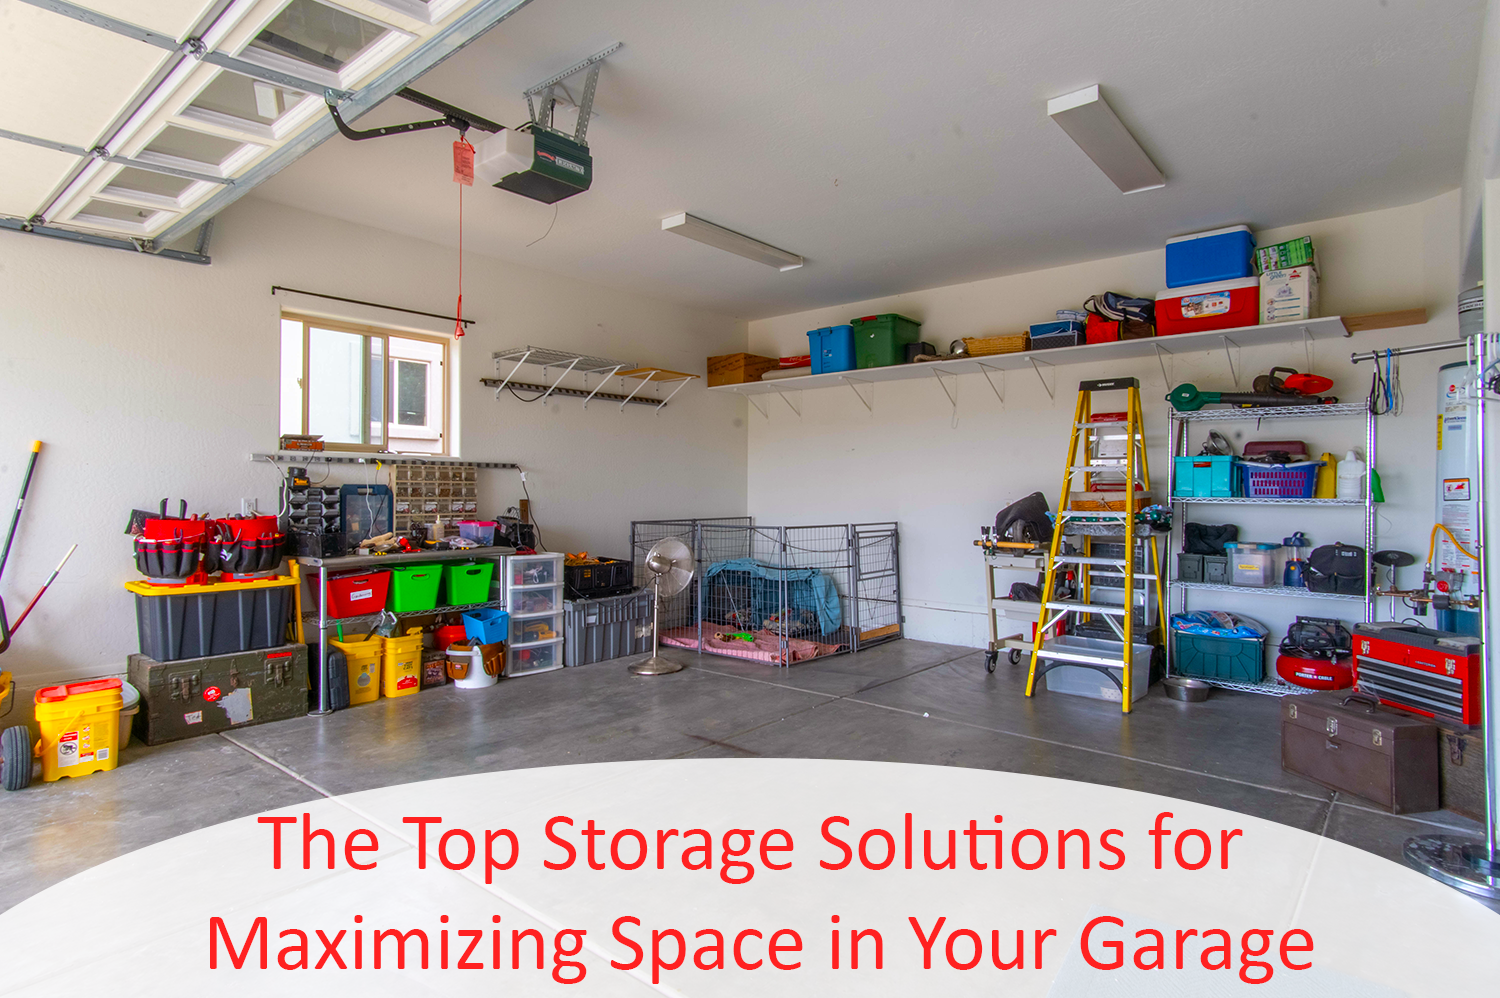 A garage utilzing popular storage solutions to keep it organized.